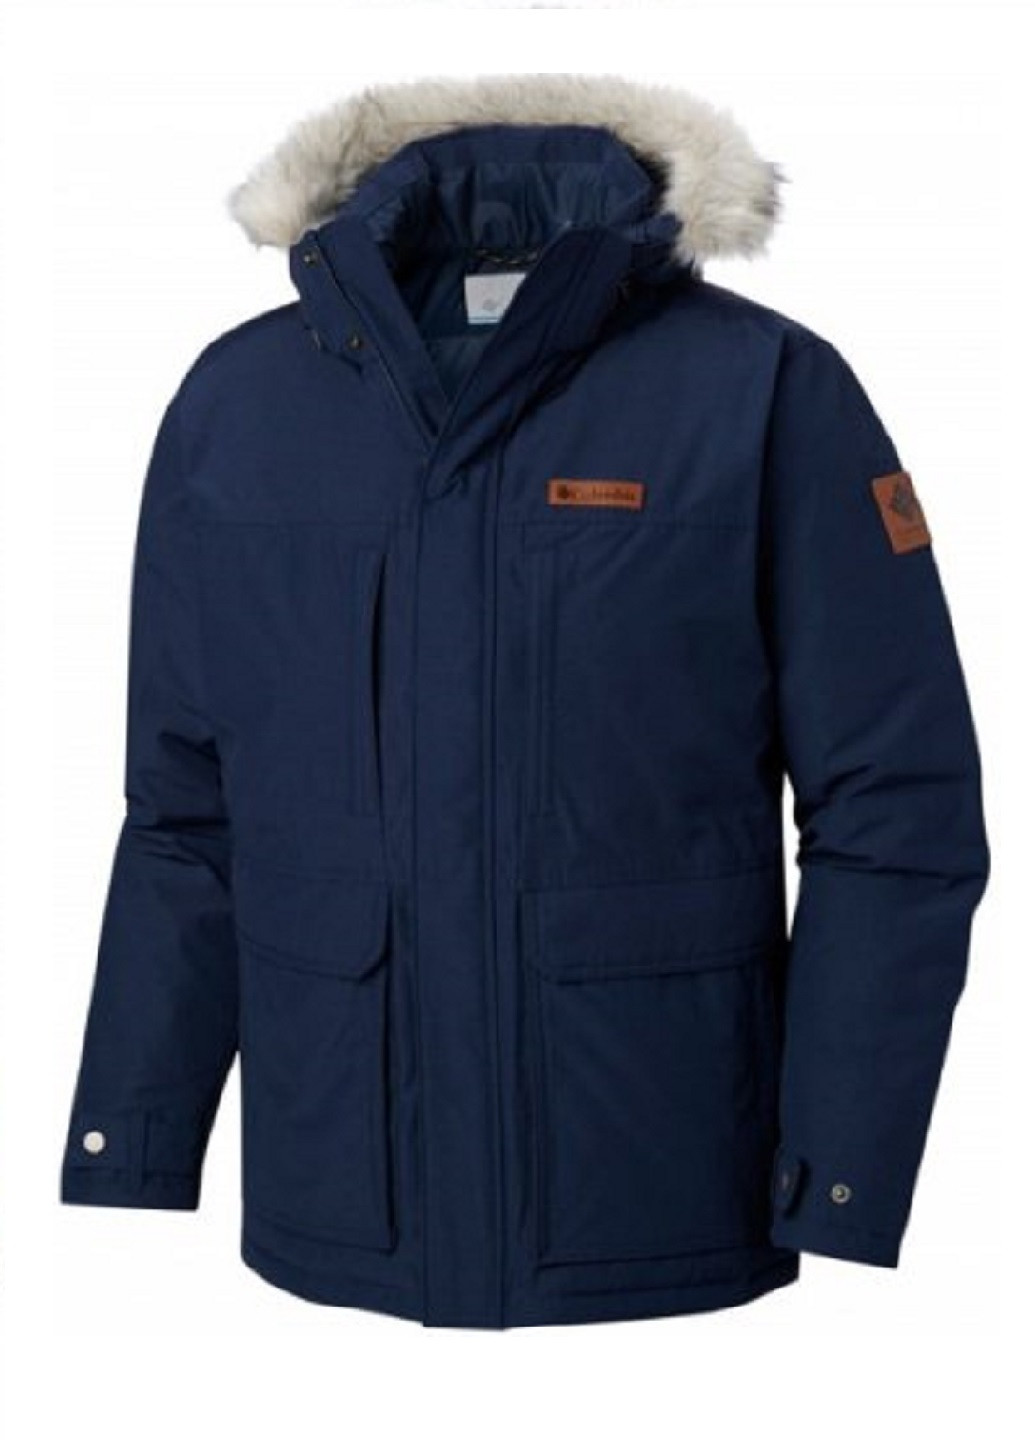 Чорна зимня куртка marquam peak ™ jacket Columbia